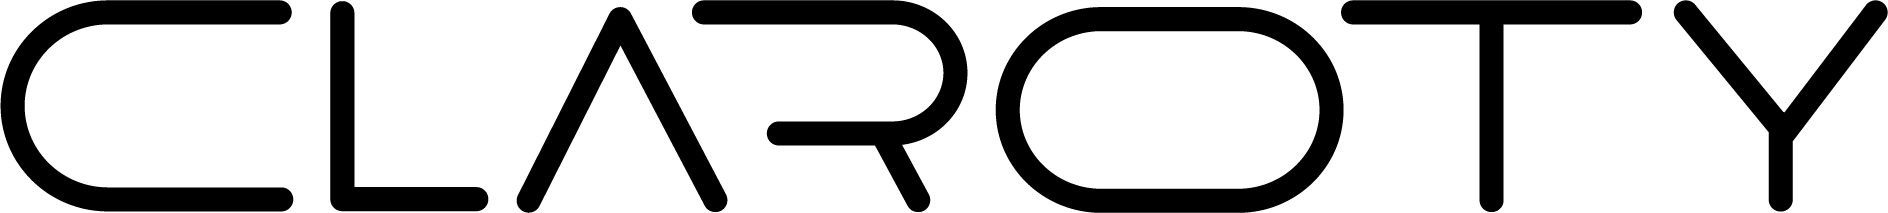 Логотип Claroty